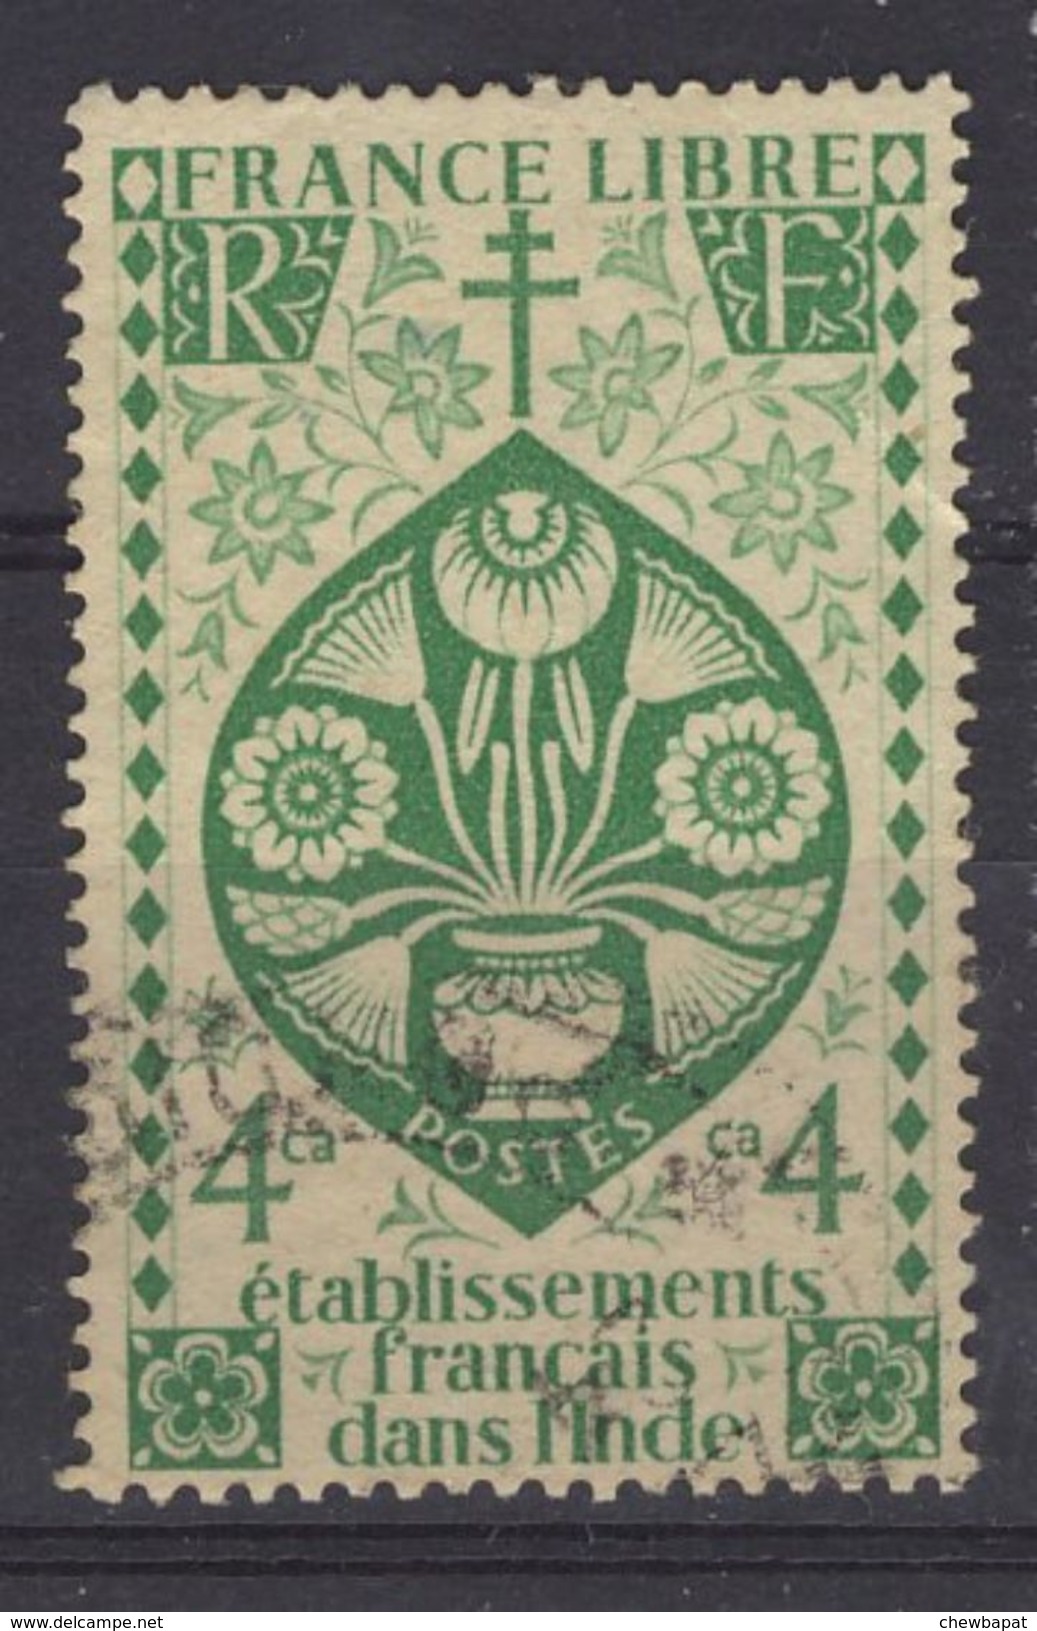 Inde - Oblitéré -  France Libre Etablissement Francais Dans L'Inde - Used Stamps